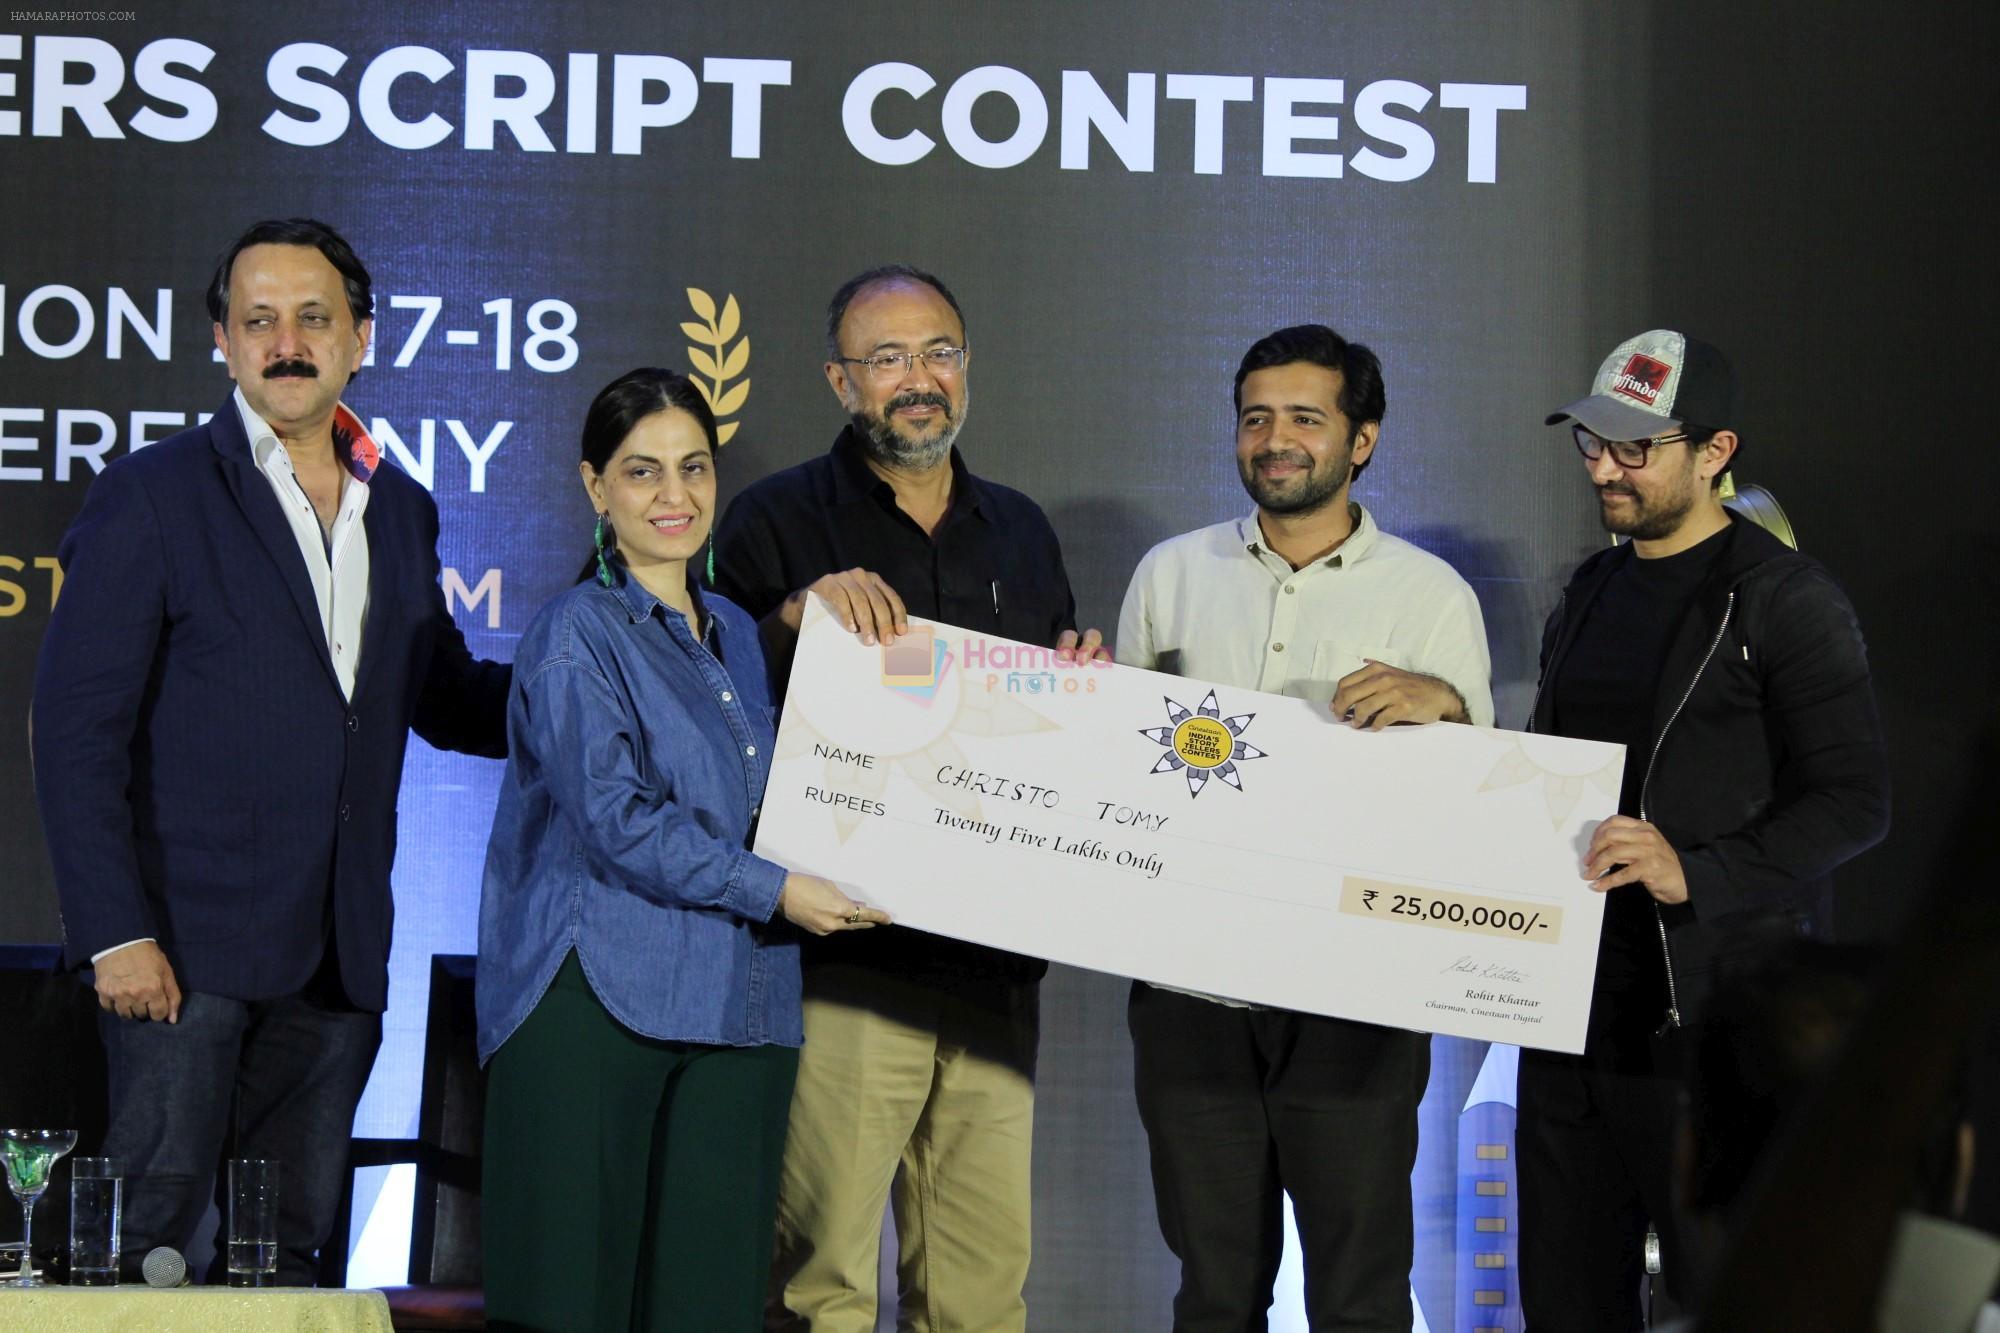 Aamir Khan, Anjum Rajabali at Grand Finale Of Cinestaan India�s Storytellers Script Contest on 26th Nov 2018